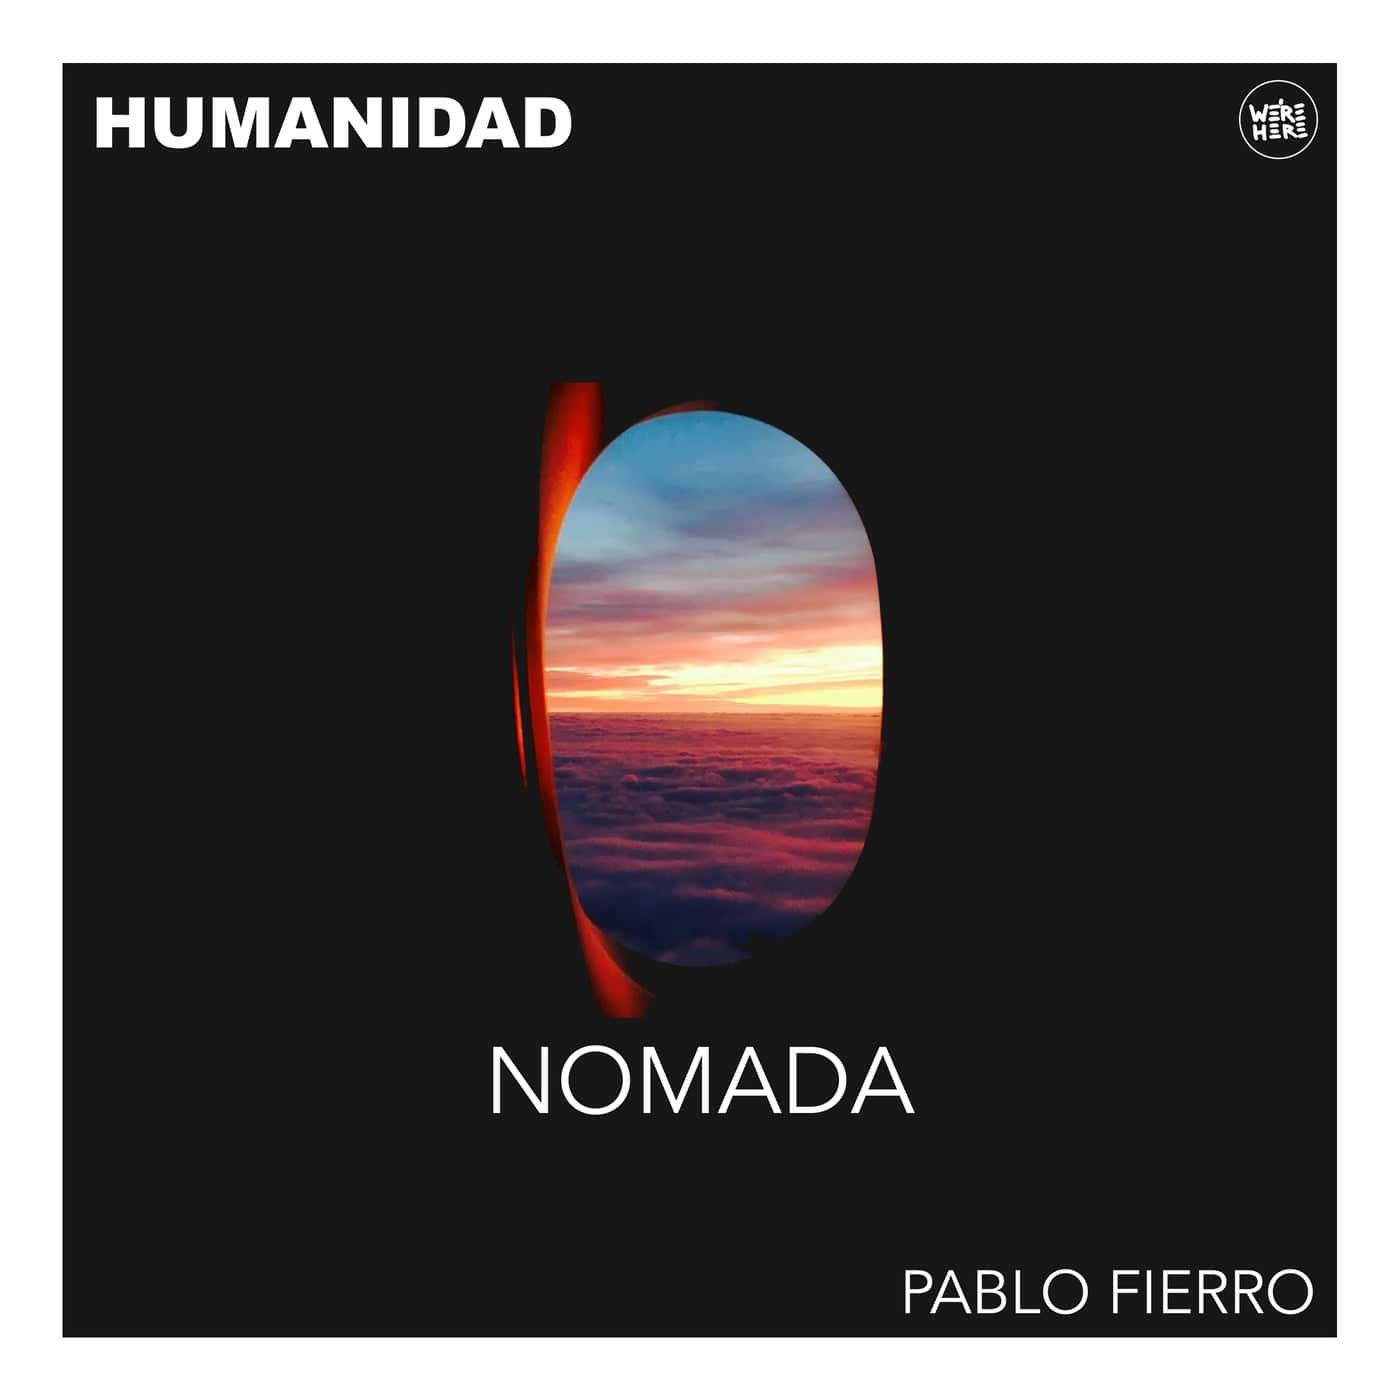 image cover: Pablo Fierro - Nomada / WAH007S1